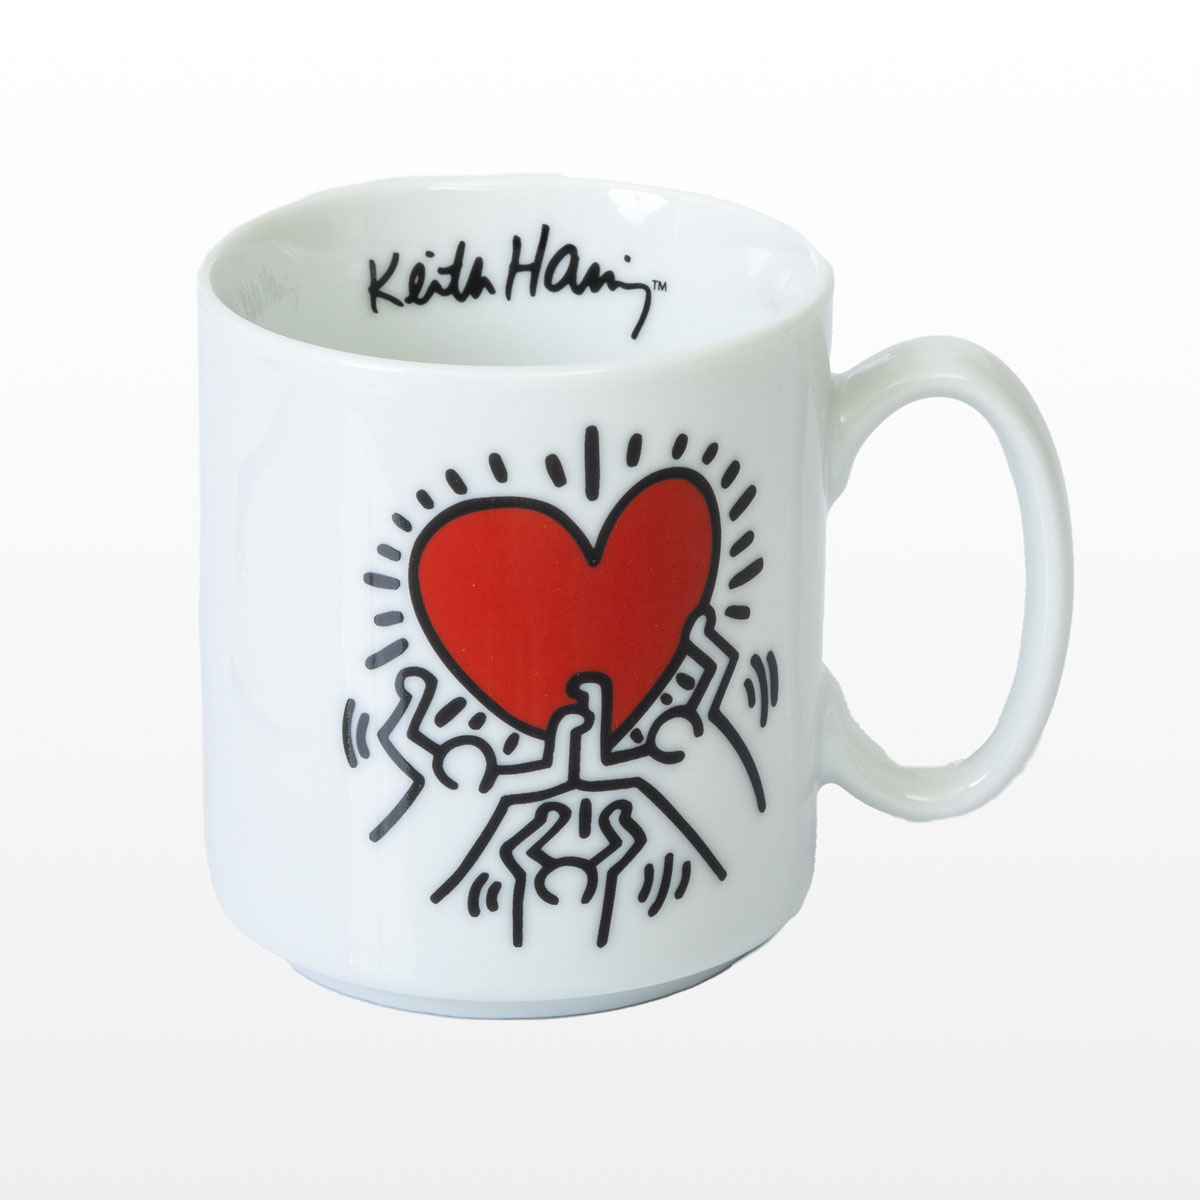 Keith Haring mug : Heart & Dancers - 3 Characters